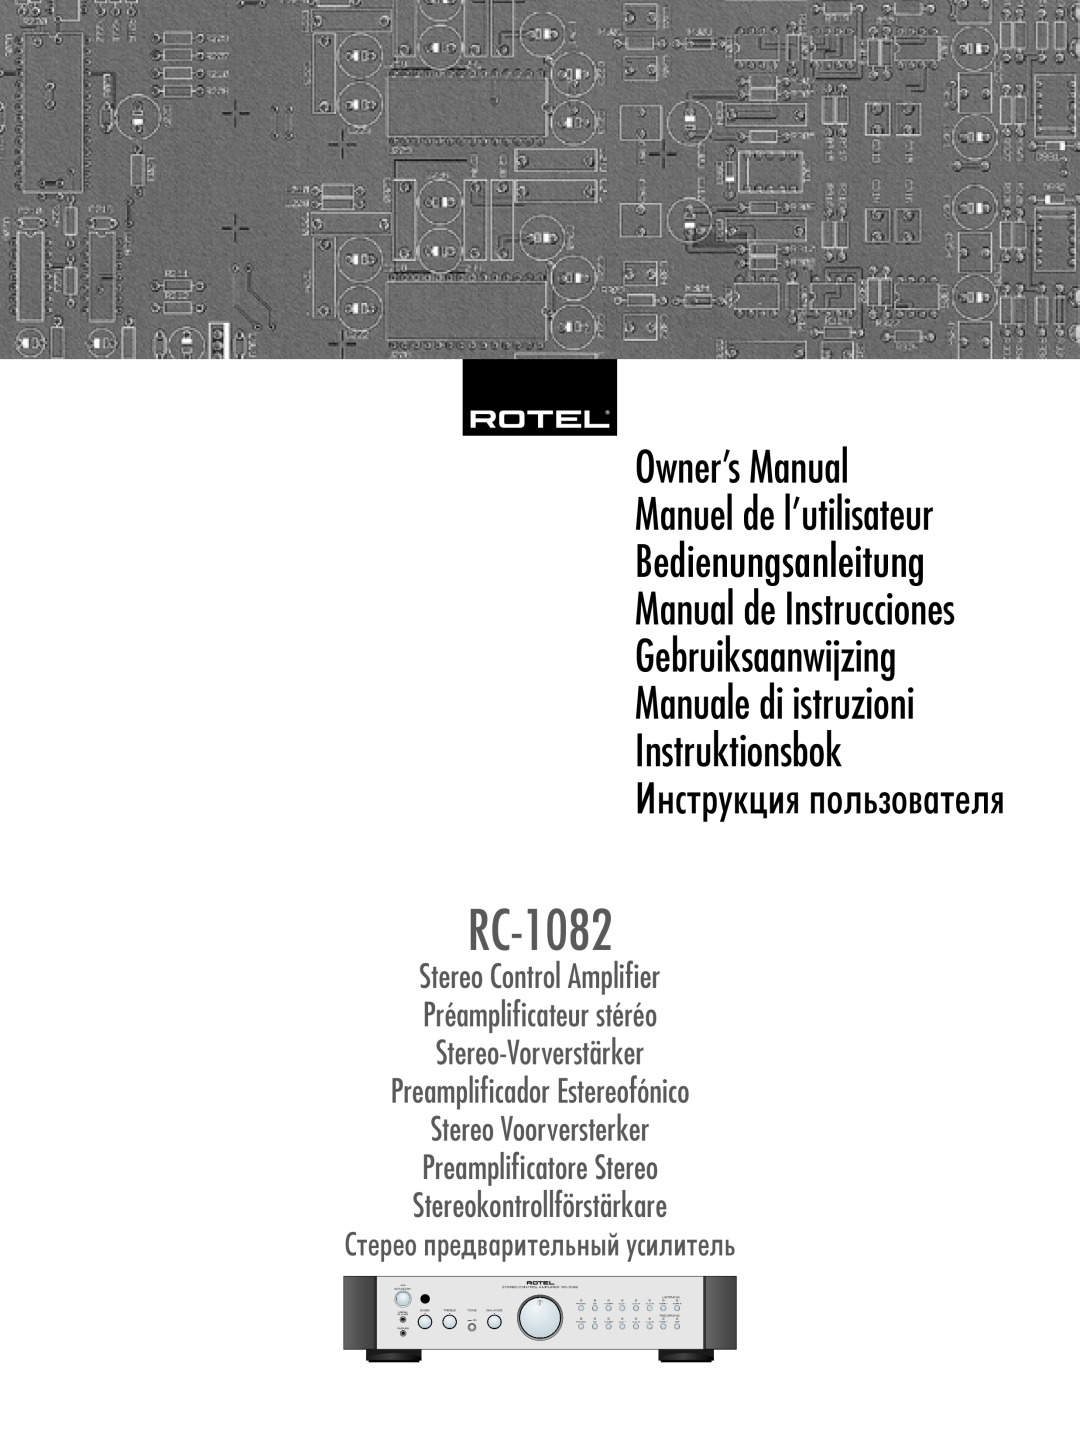 Rotel RC-1082 owner manual Owner’s Manual Manuel de l’utilisateur, Bedienungsanleitung, Manual de Instrucciones 